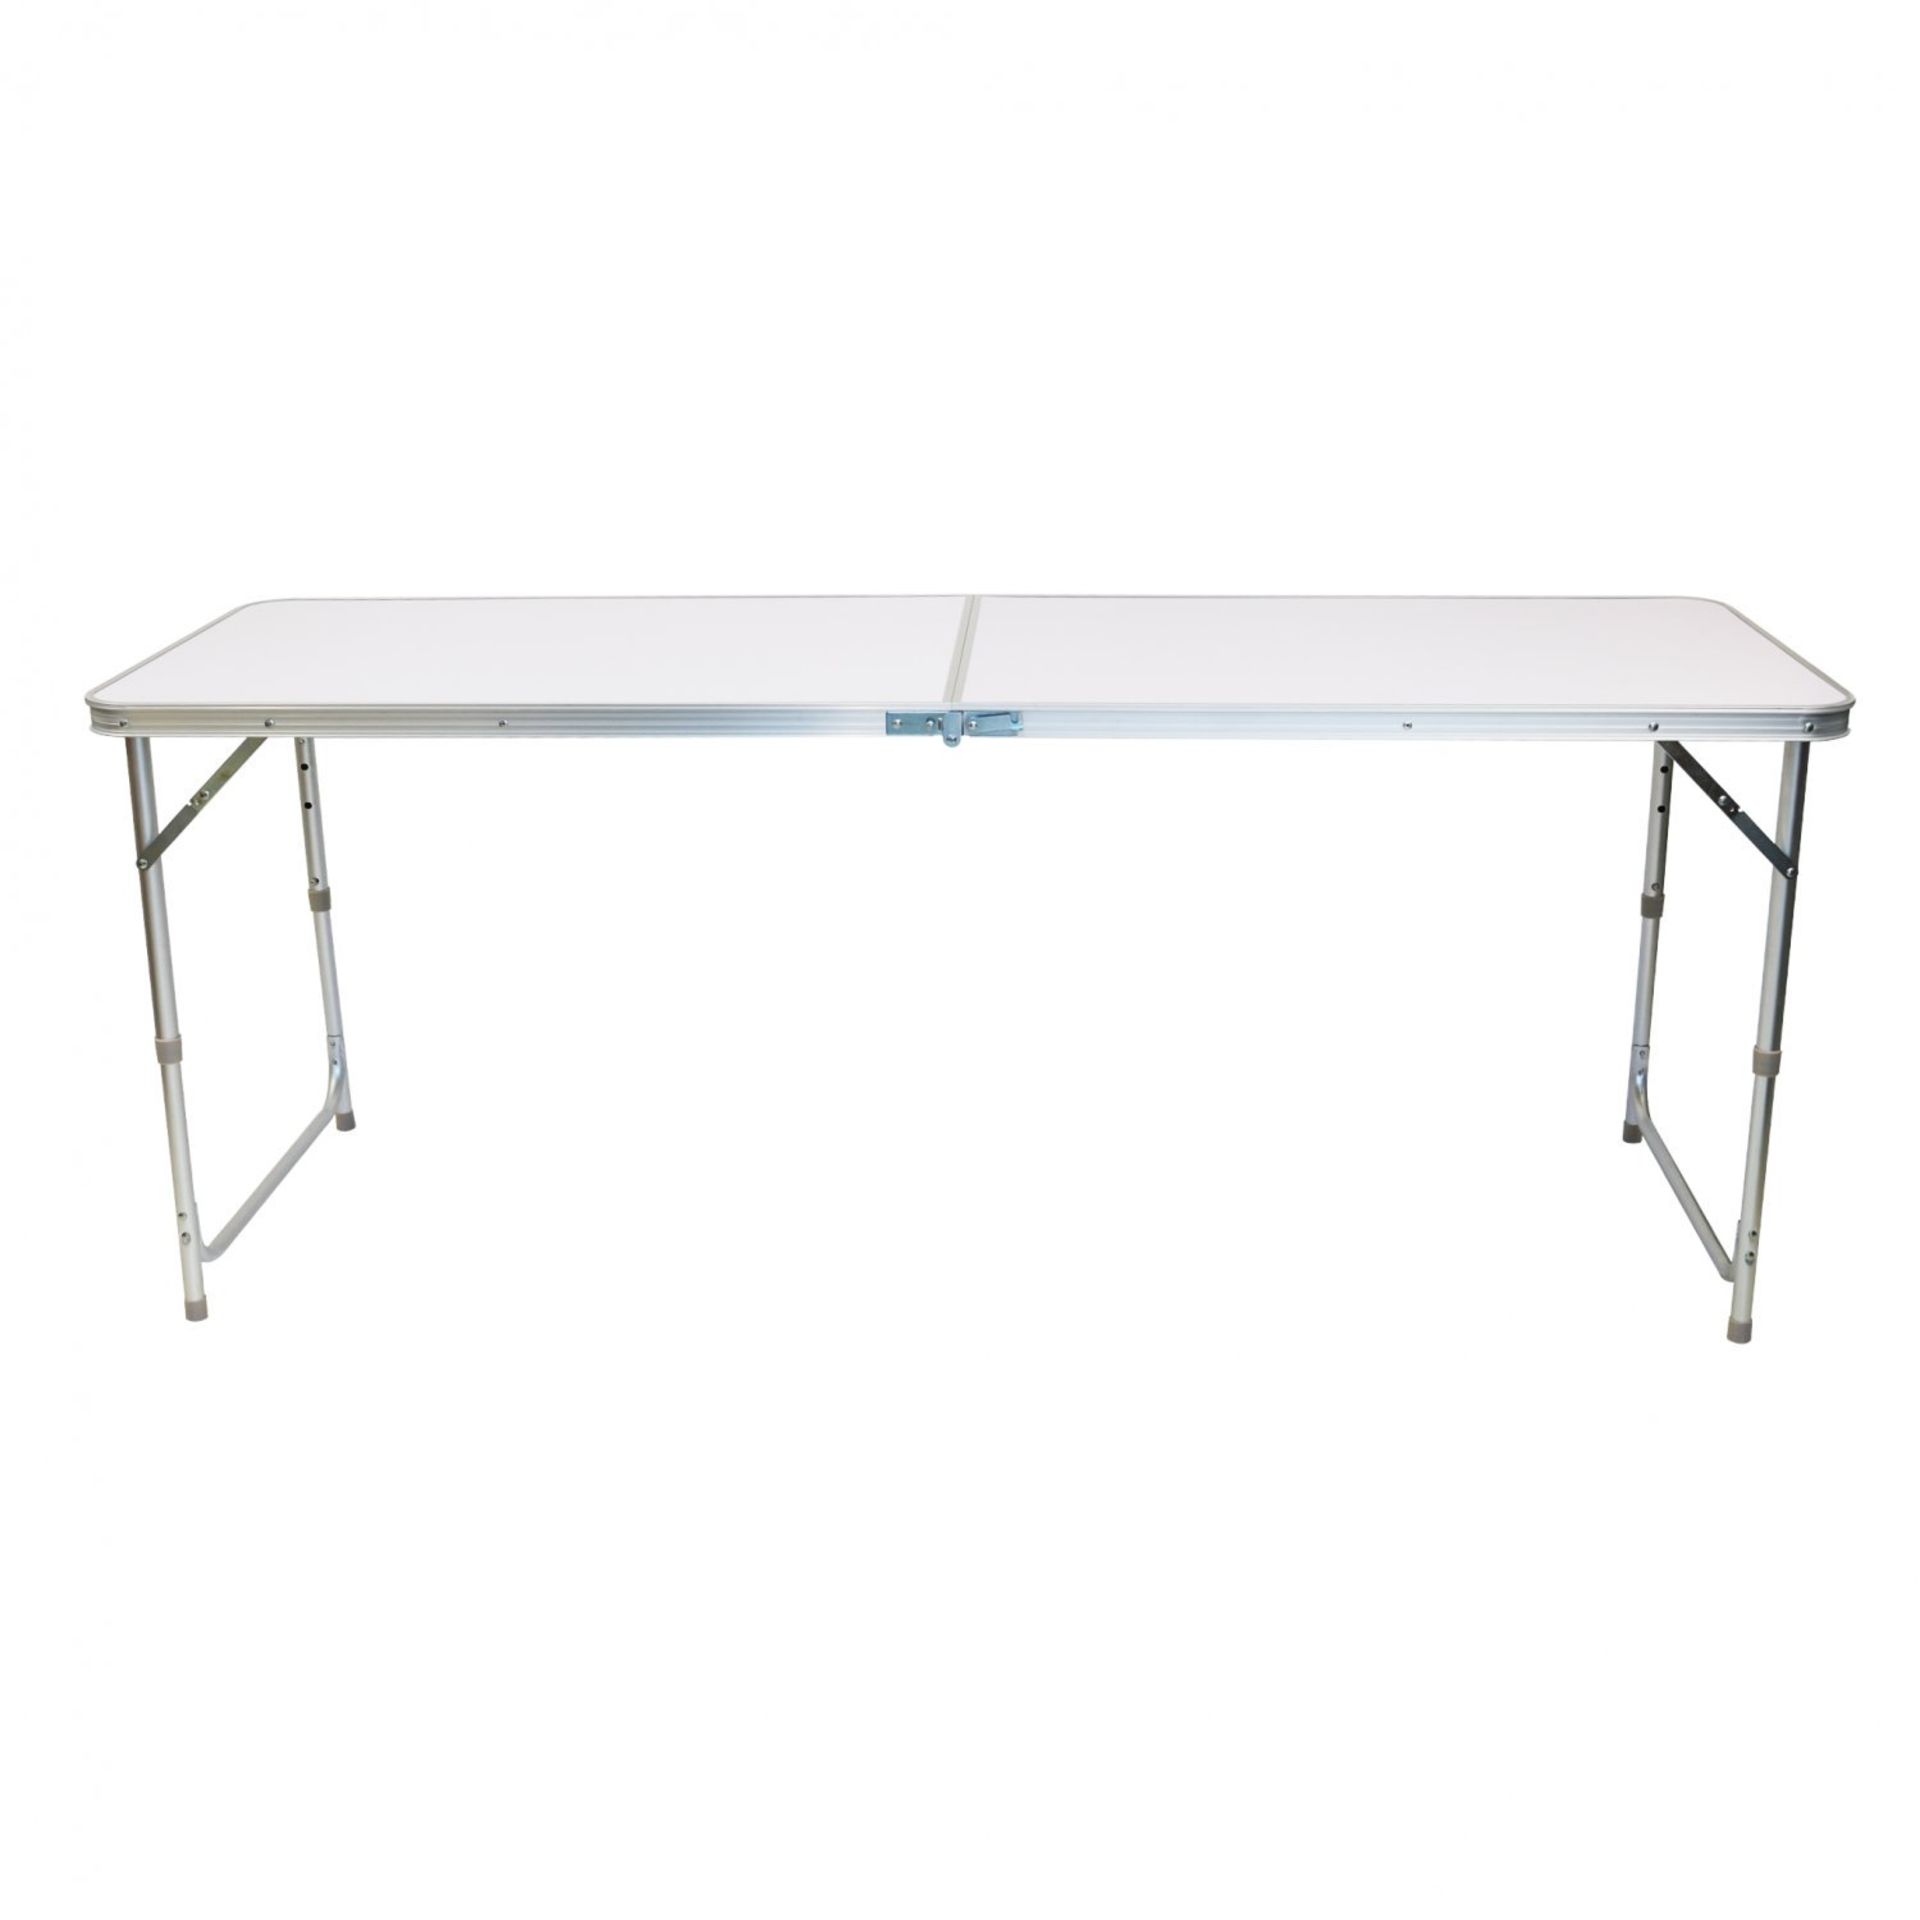 (LF181) 4ft Folding Outdoor Camping Kitchen Work Top Table The aluminium folding picnic tabl... - Bild 2 aus 2